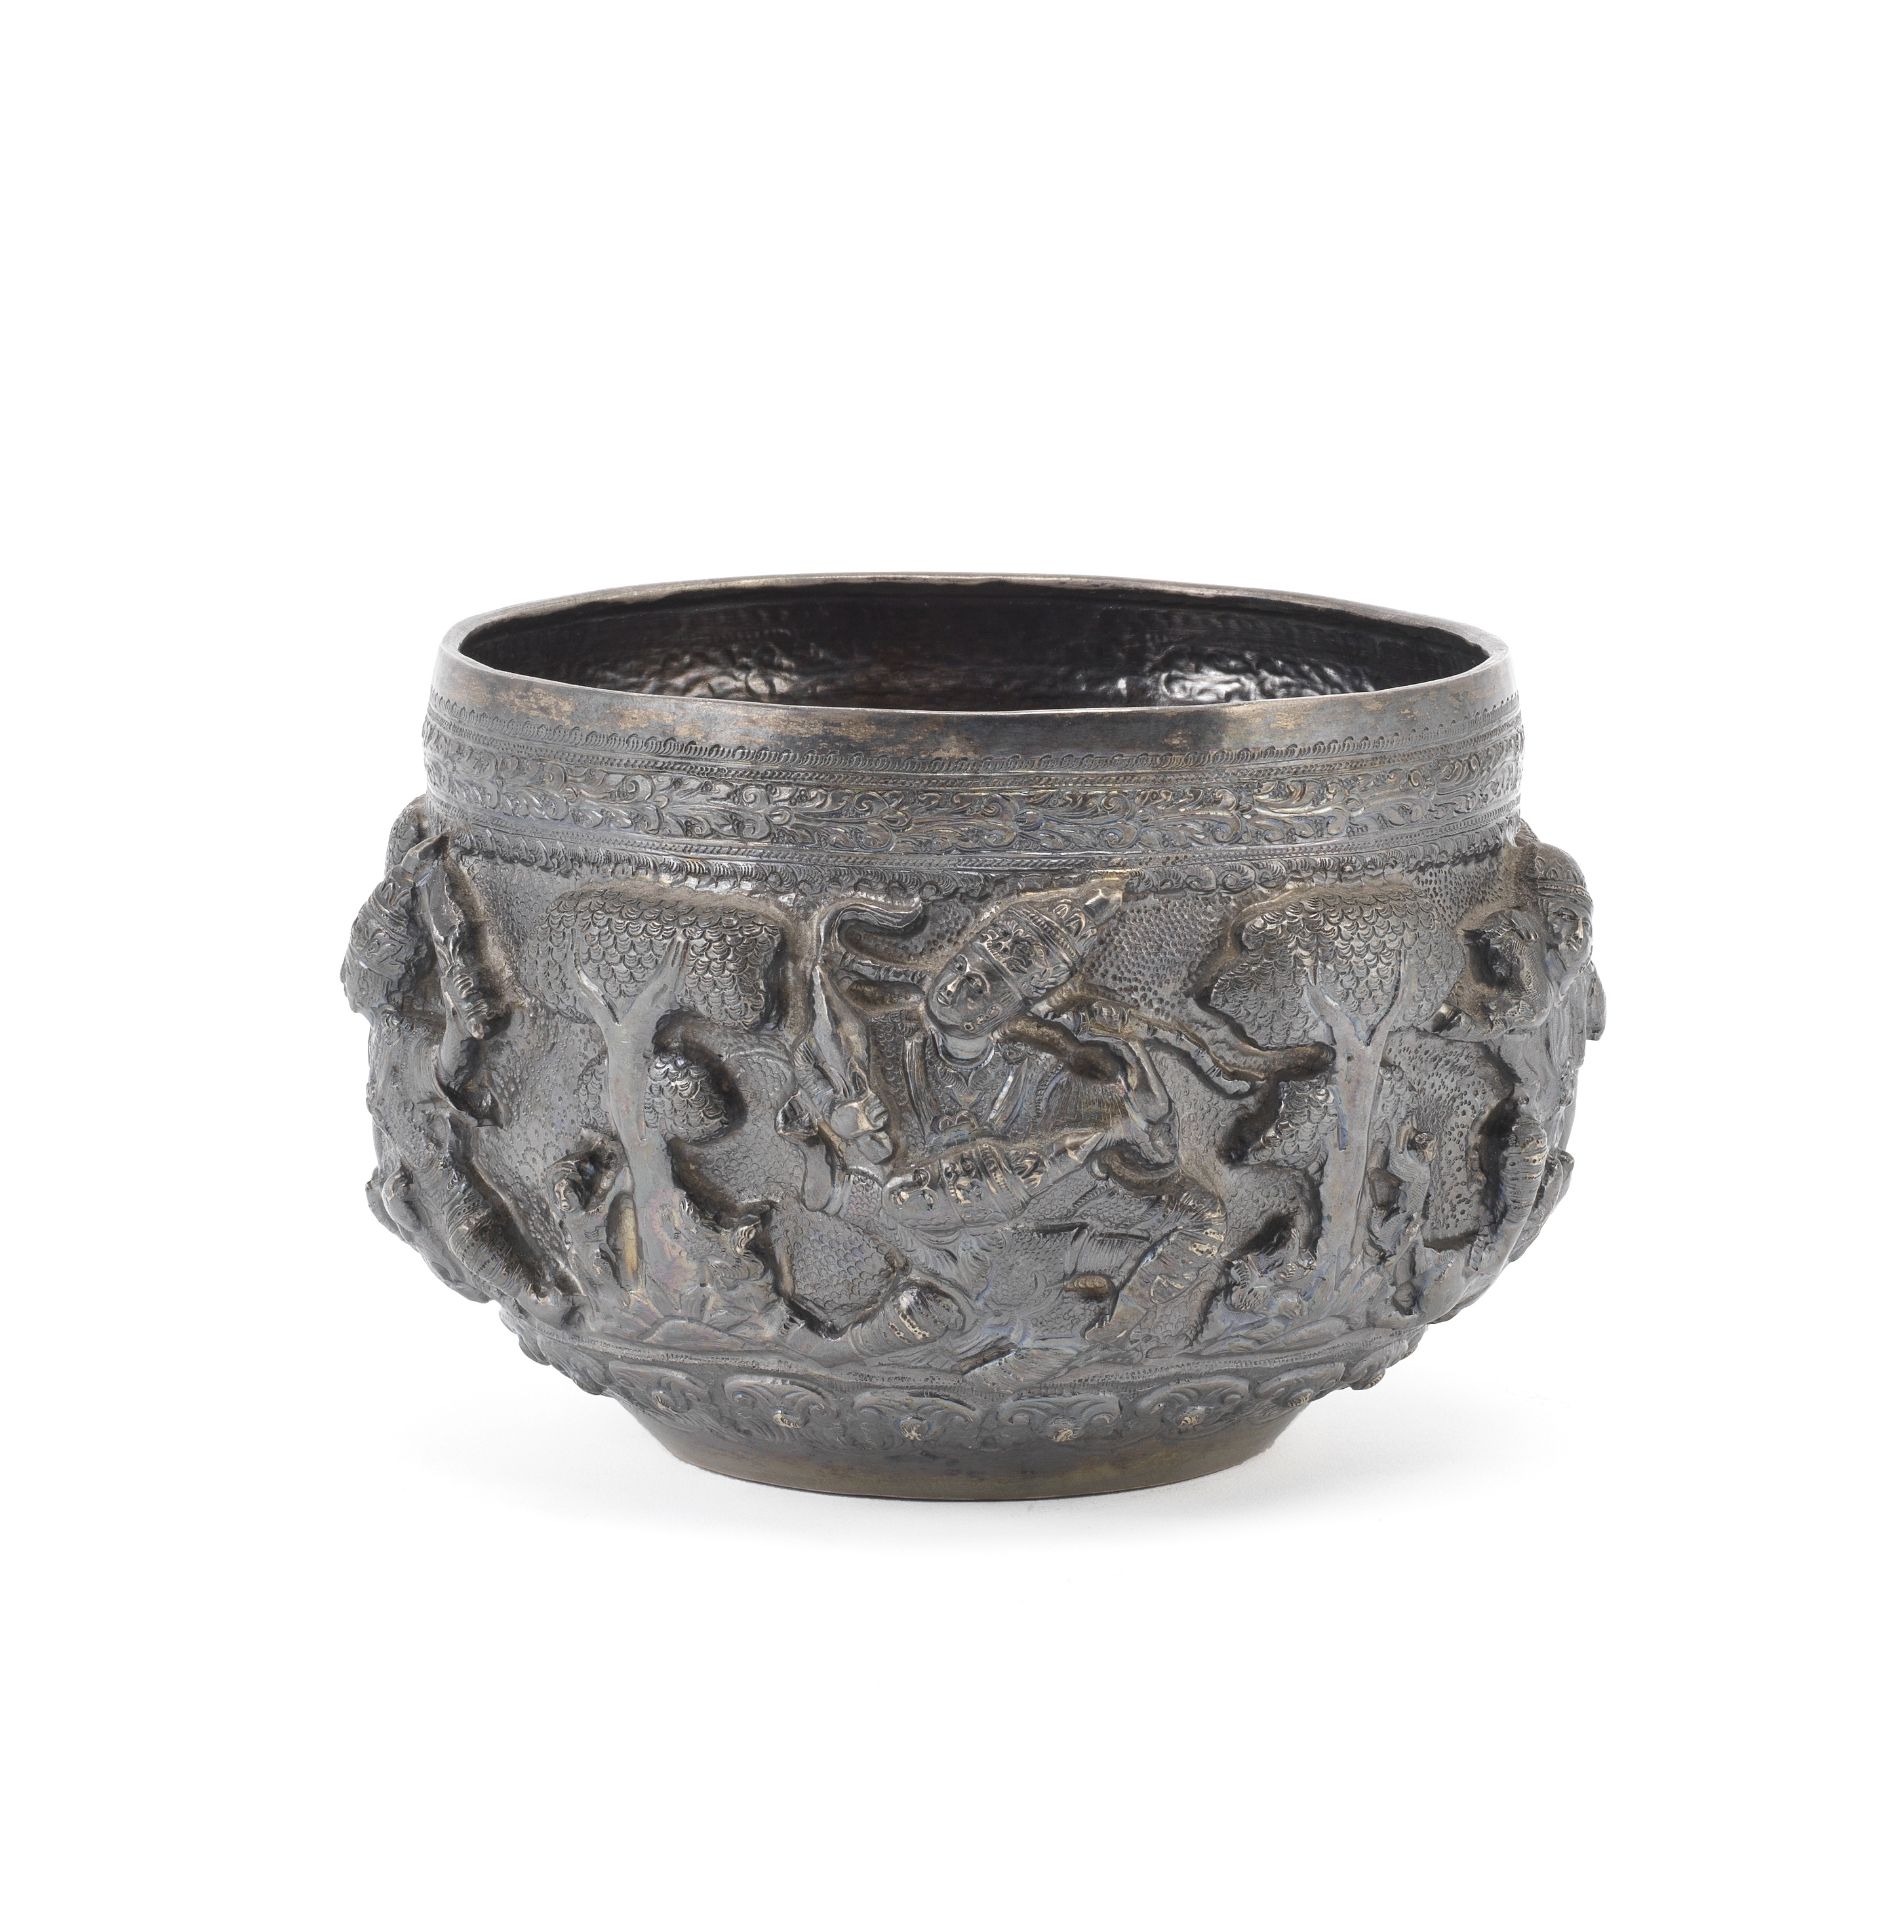 A Burmese silver bowl marked '95% silver'